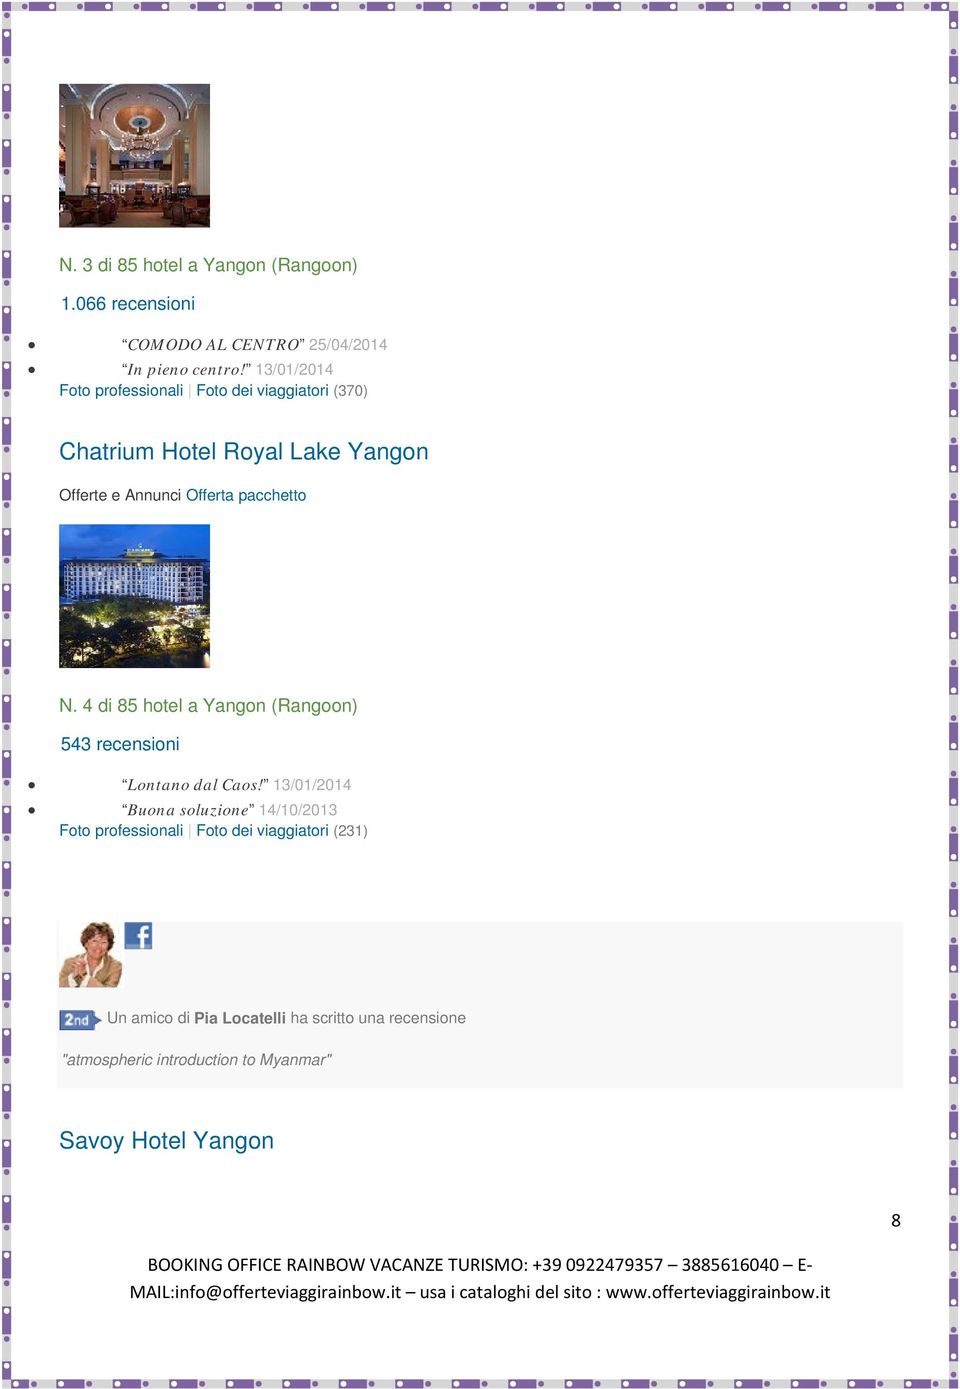 Slideshow N. 4 di 85 hotel a Yangon (Rangoon) 543 recensioni Lontano dal Caos!